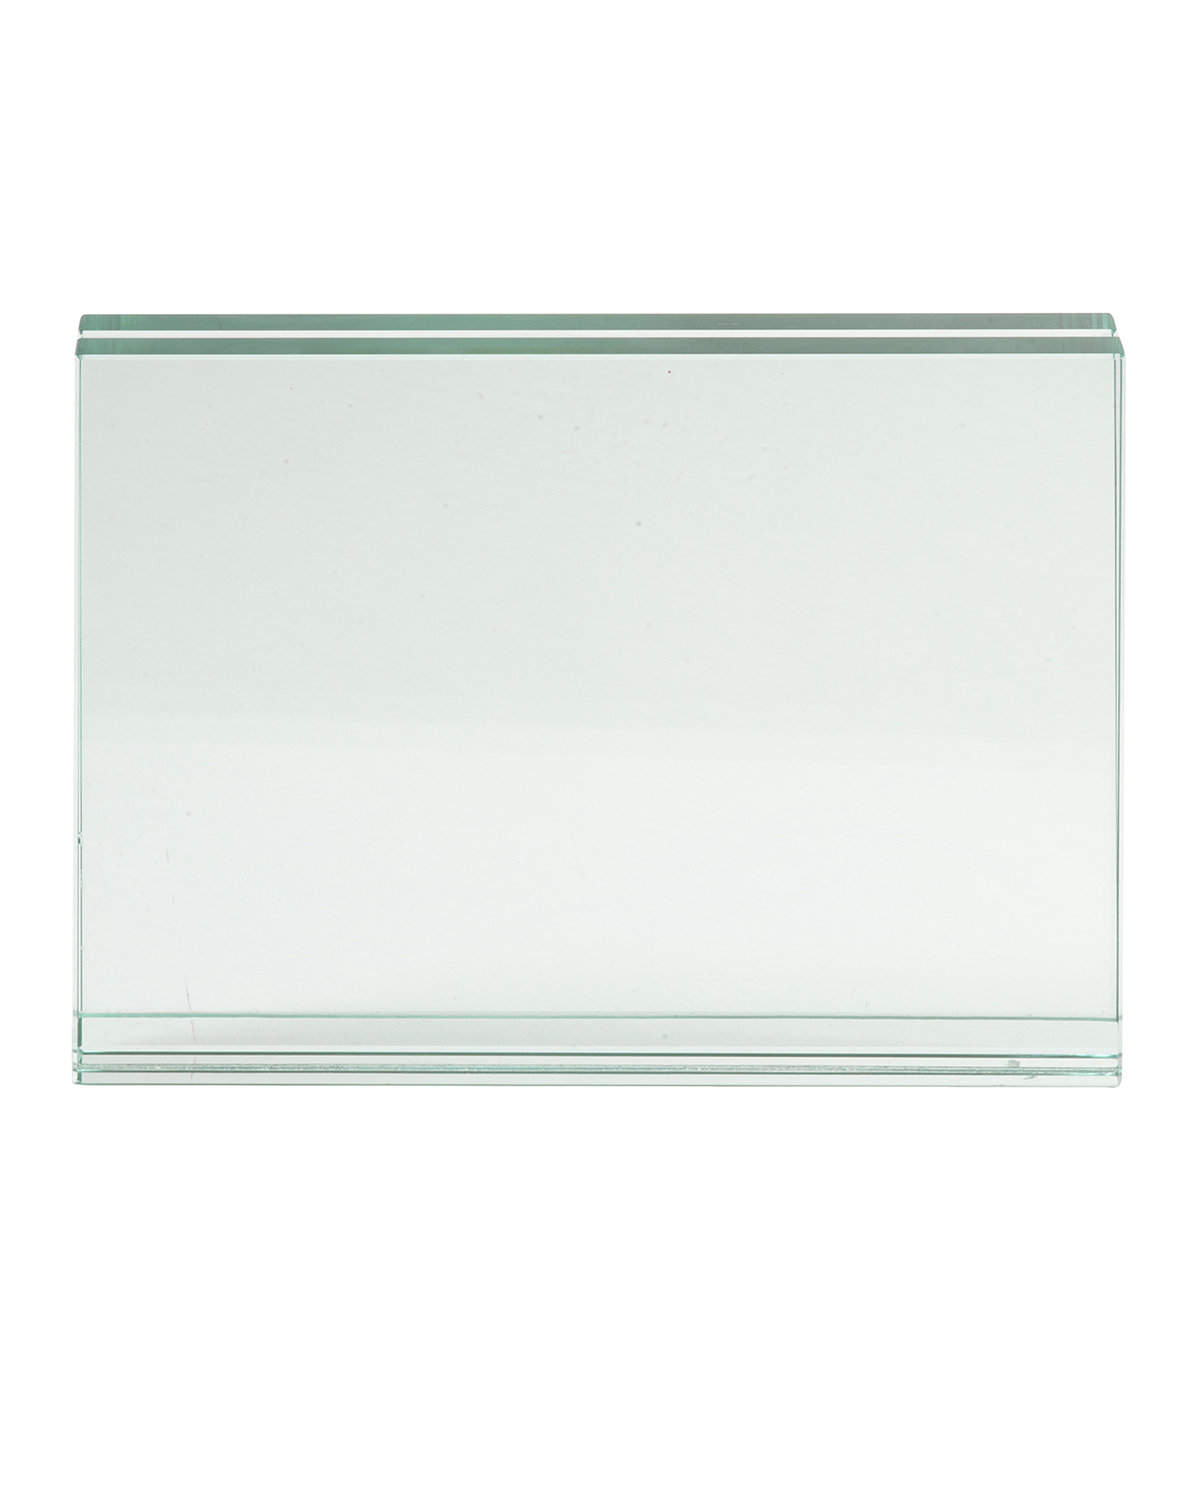 Atrium Glass Large Desk Photo Frame-